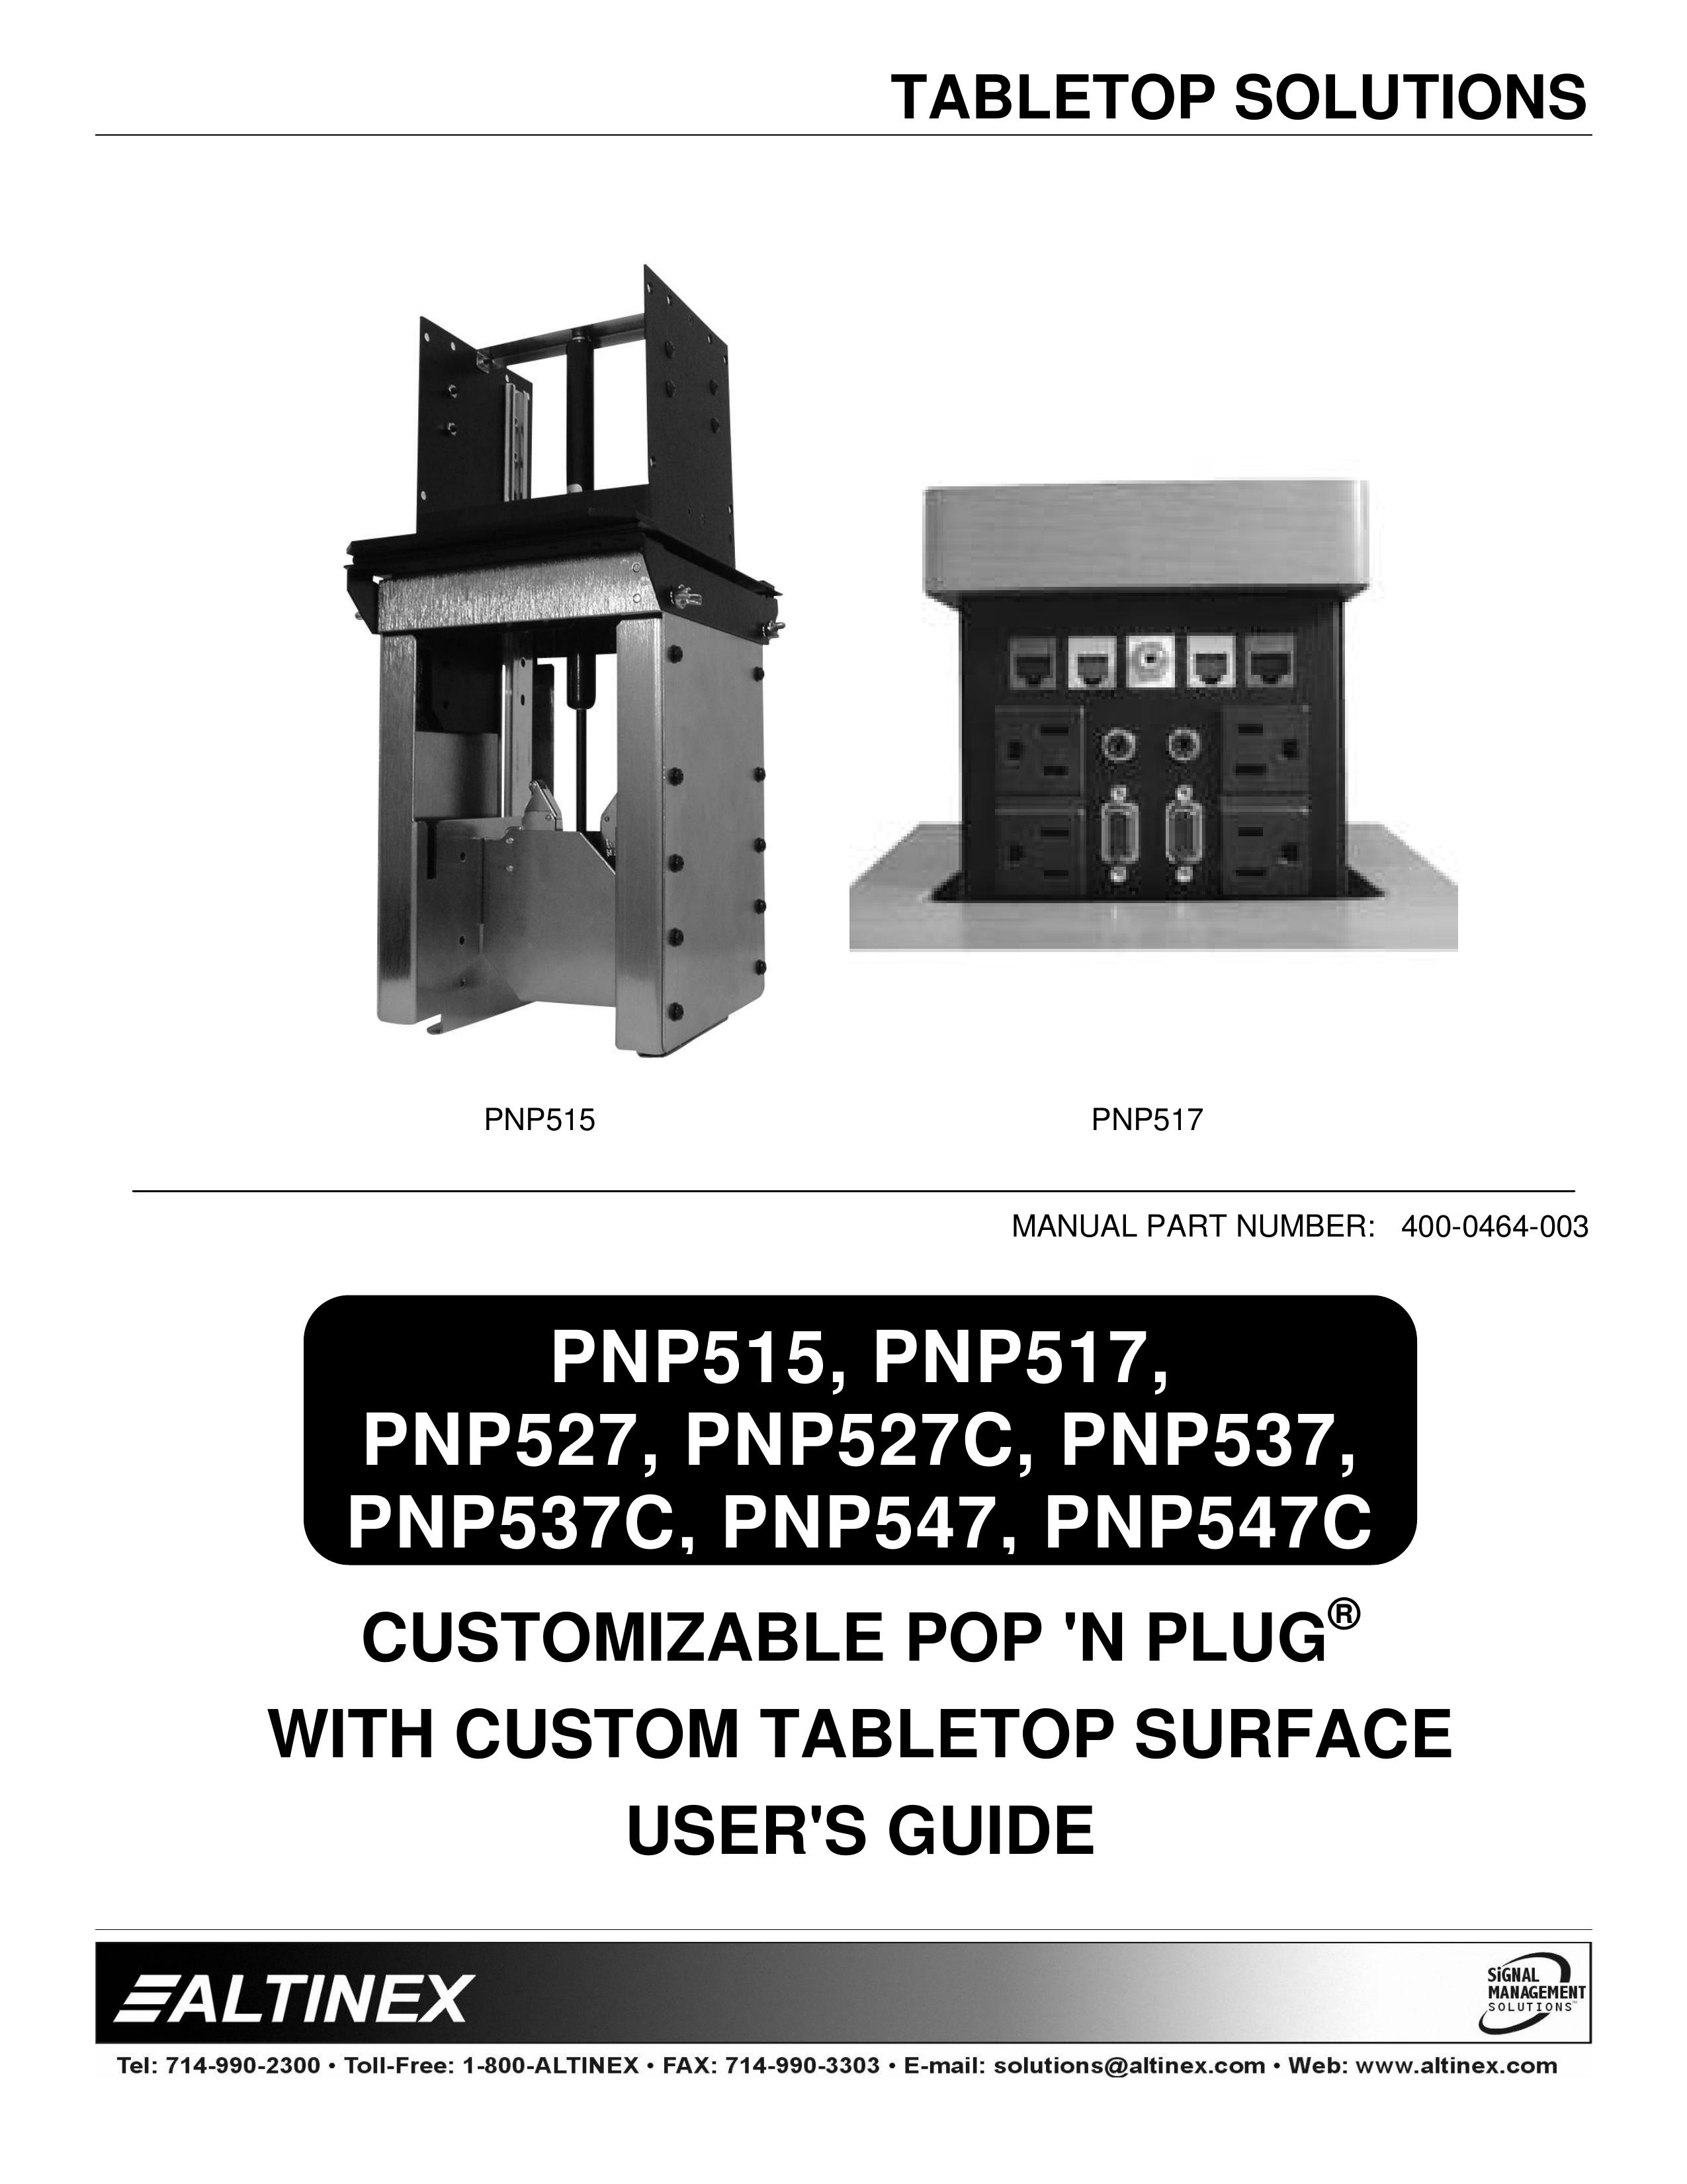 Altinex PNP547 Water Dispenser User Manual